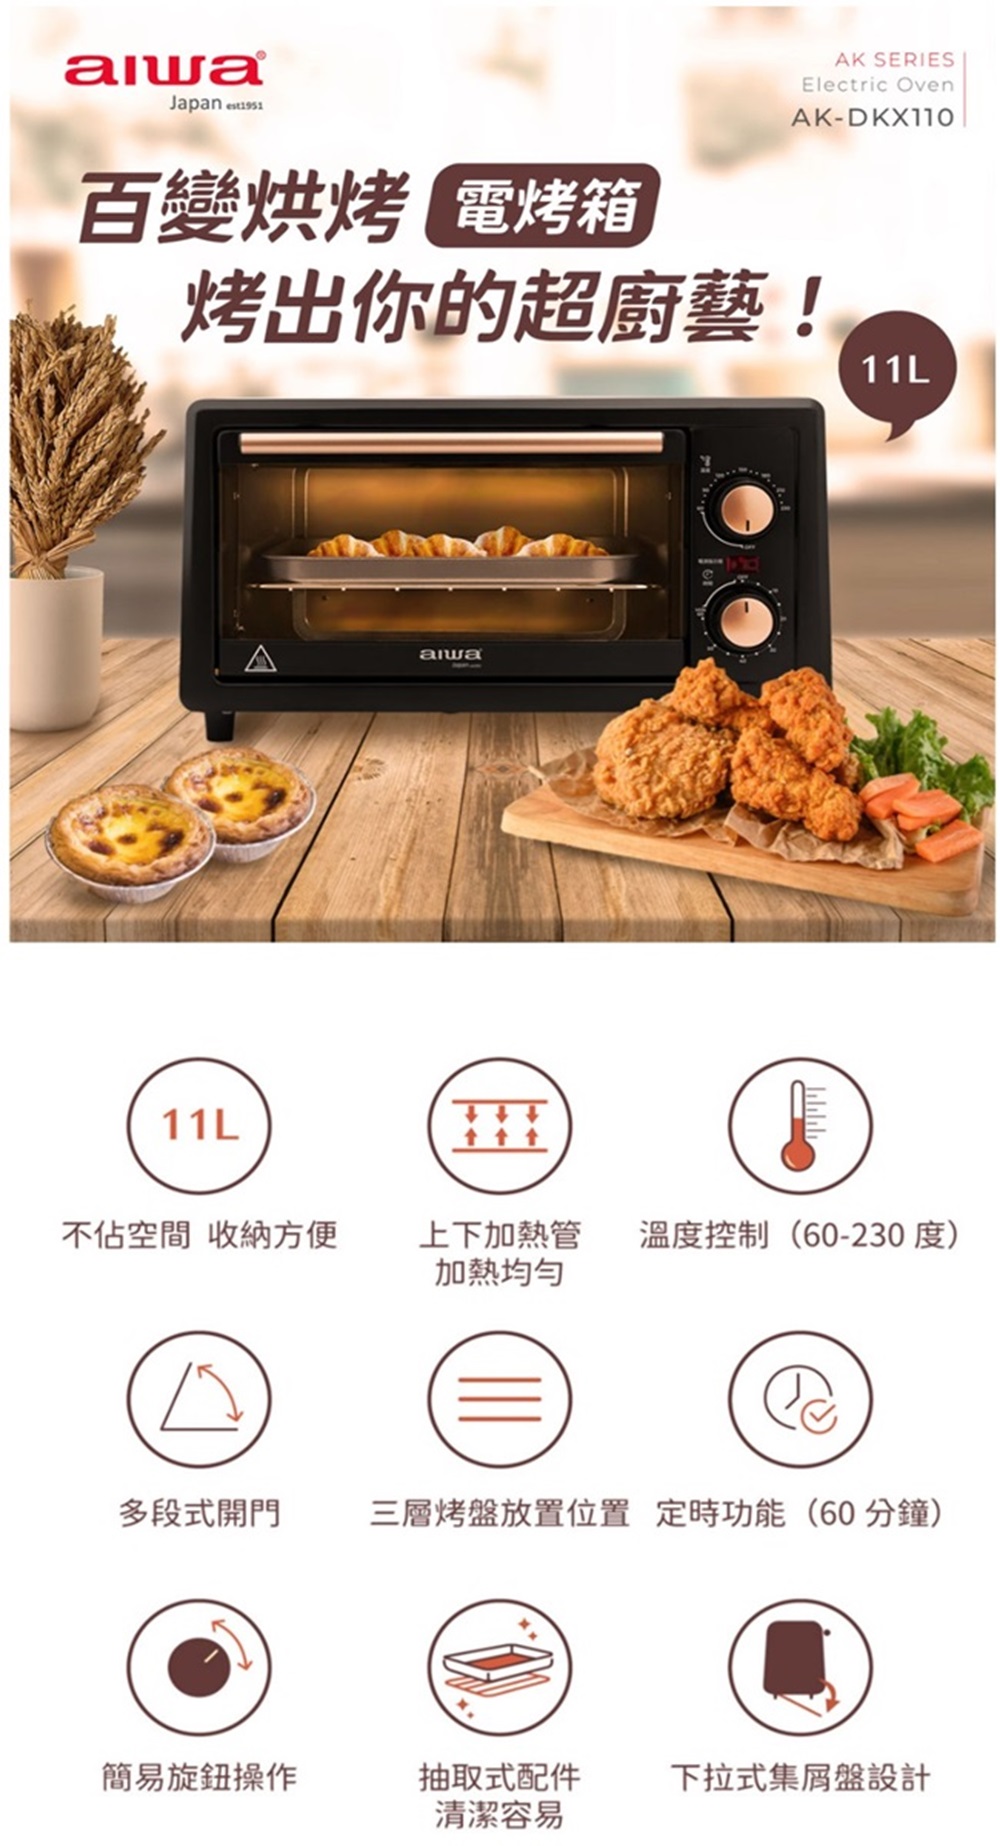 Japan AK SERIESElectric OvenAK-DKX110百變烘烤 電烤箱烤出你的超廚藝!aiwa11L11L不佔空間 收納方便上下加熱管加熱溫度控制(60-230度)多段式開門三層烤盤放置位置 定時功能(60分鐘)簡易旋鈕操作抽取式配件下拉式集盤設計清潔容易